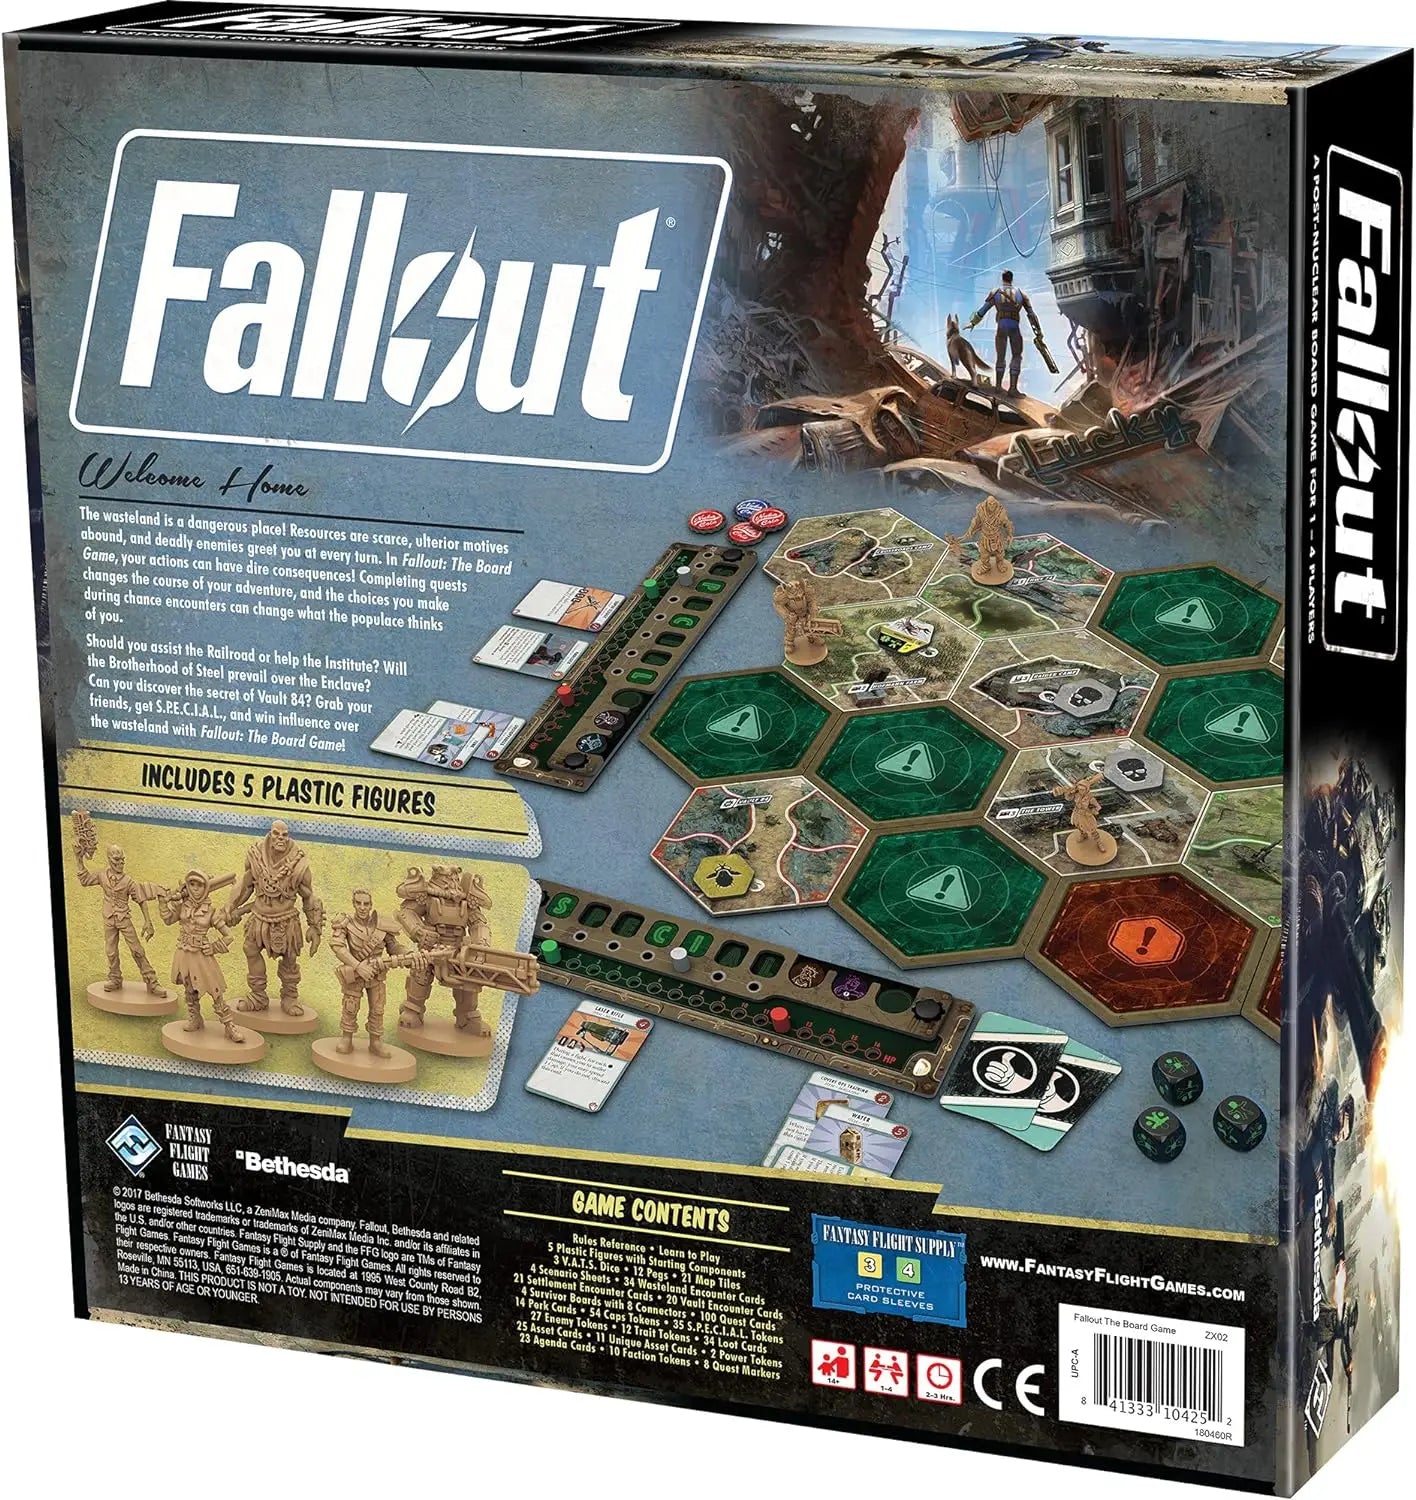 Fallout board game